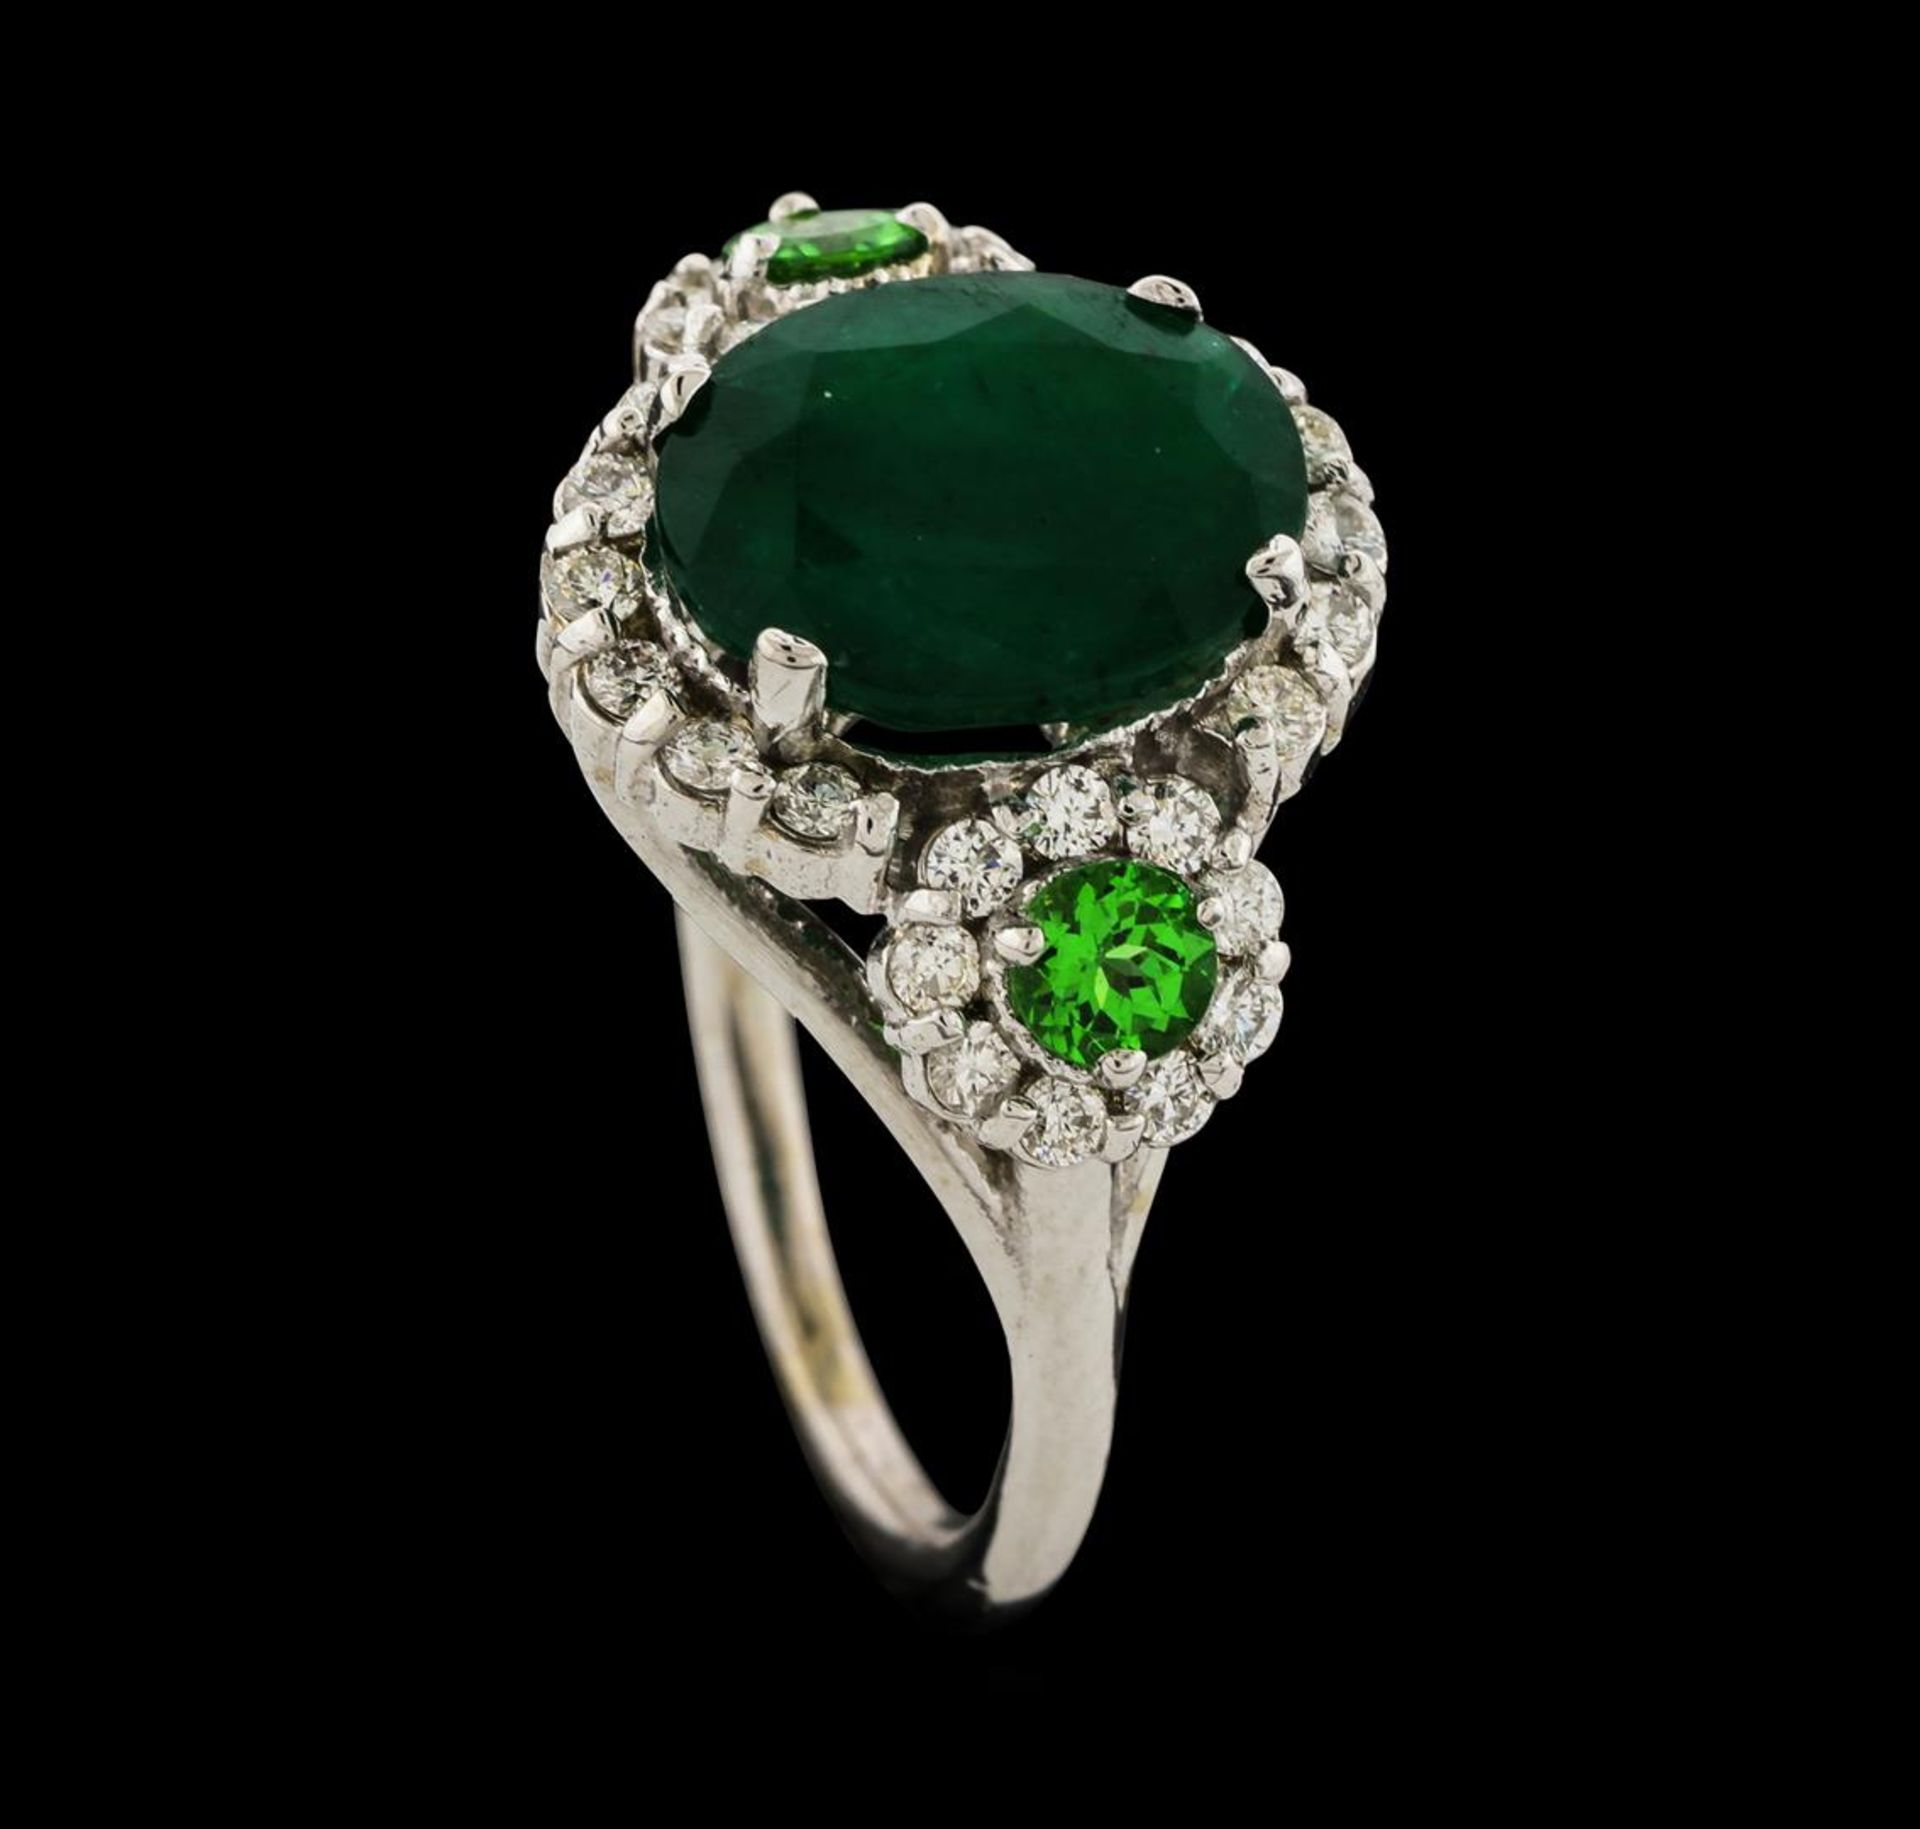 3.88 ctw Emerald, Tsavorite and Diamond Ring - 14KT White Gold - Image 5 of 6